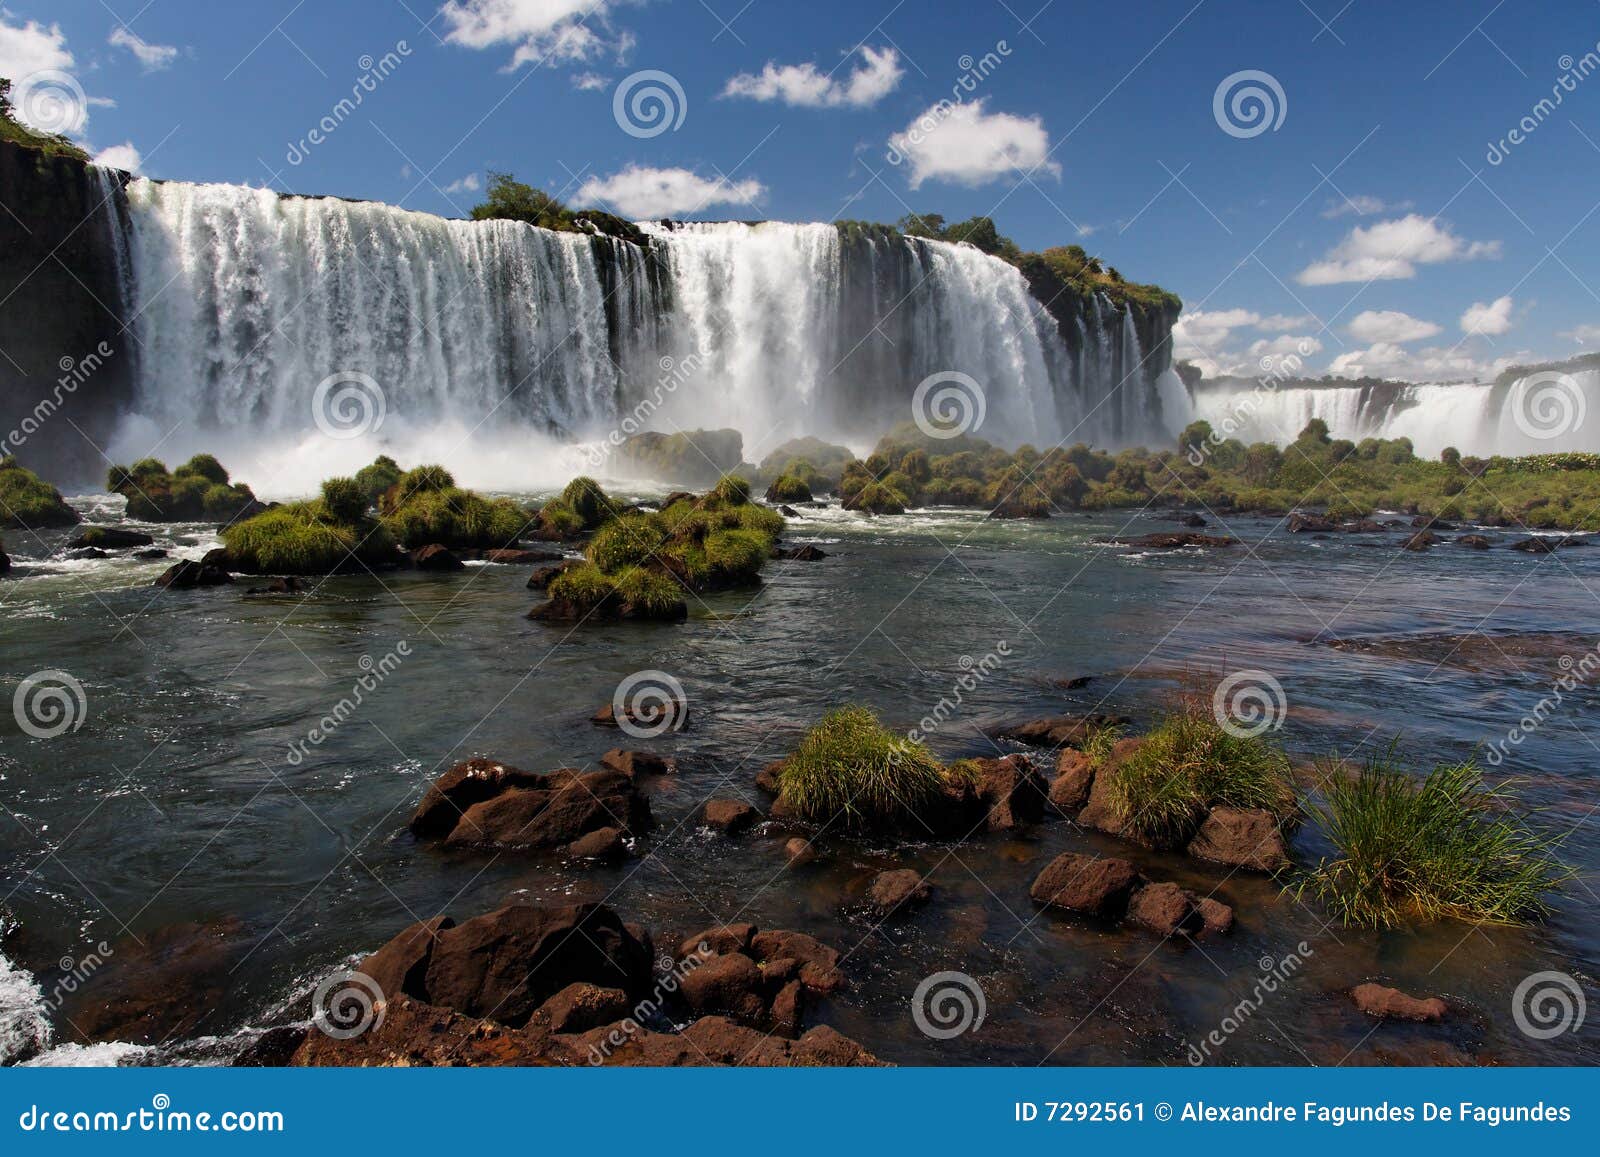 waterfalls in foz do iguassu brazil